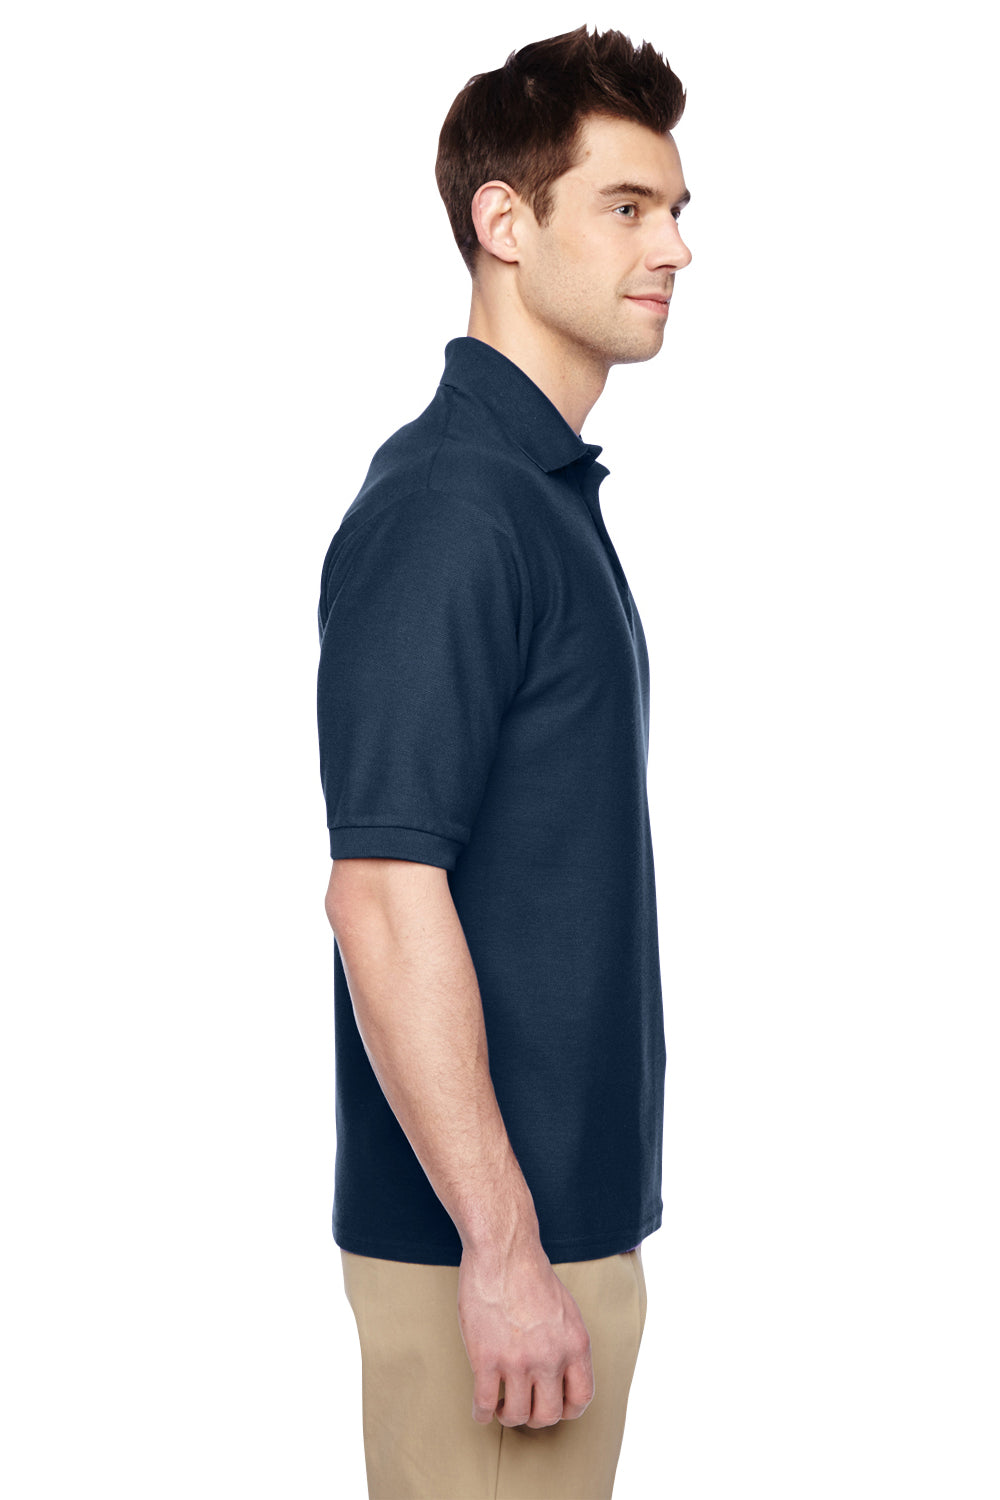 Jerzees 537MSR Mens Easy Care Moisture Wicking Short Sleeve Polo Shirt Navy Blue Side